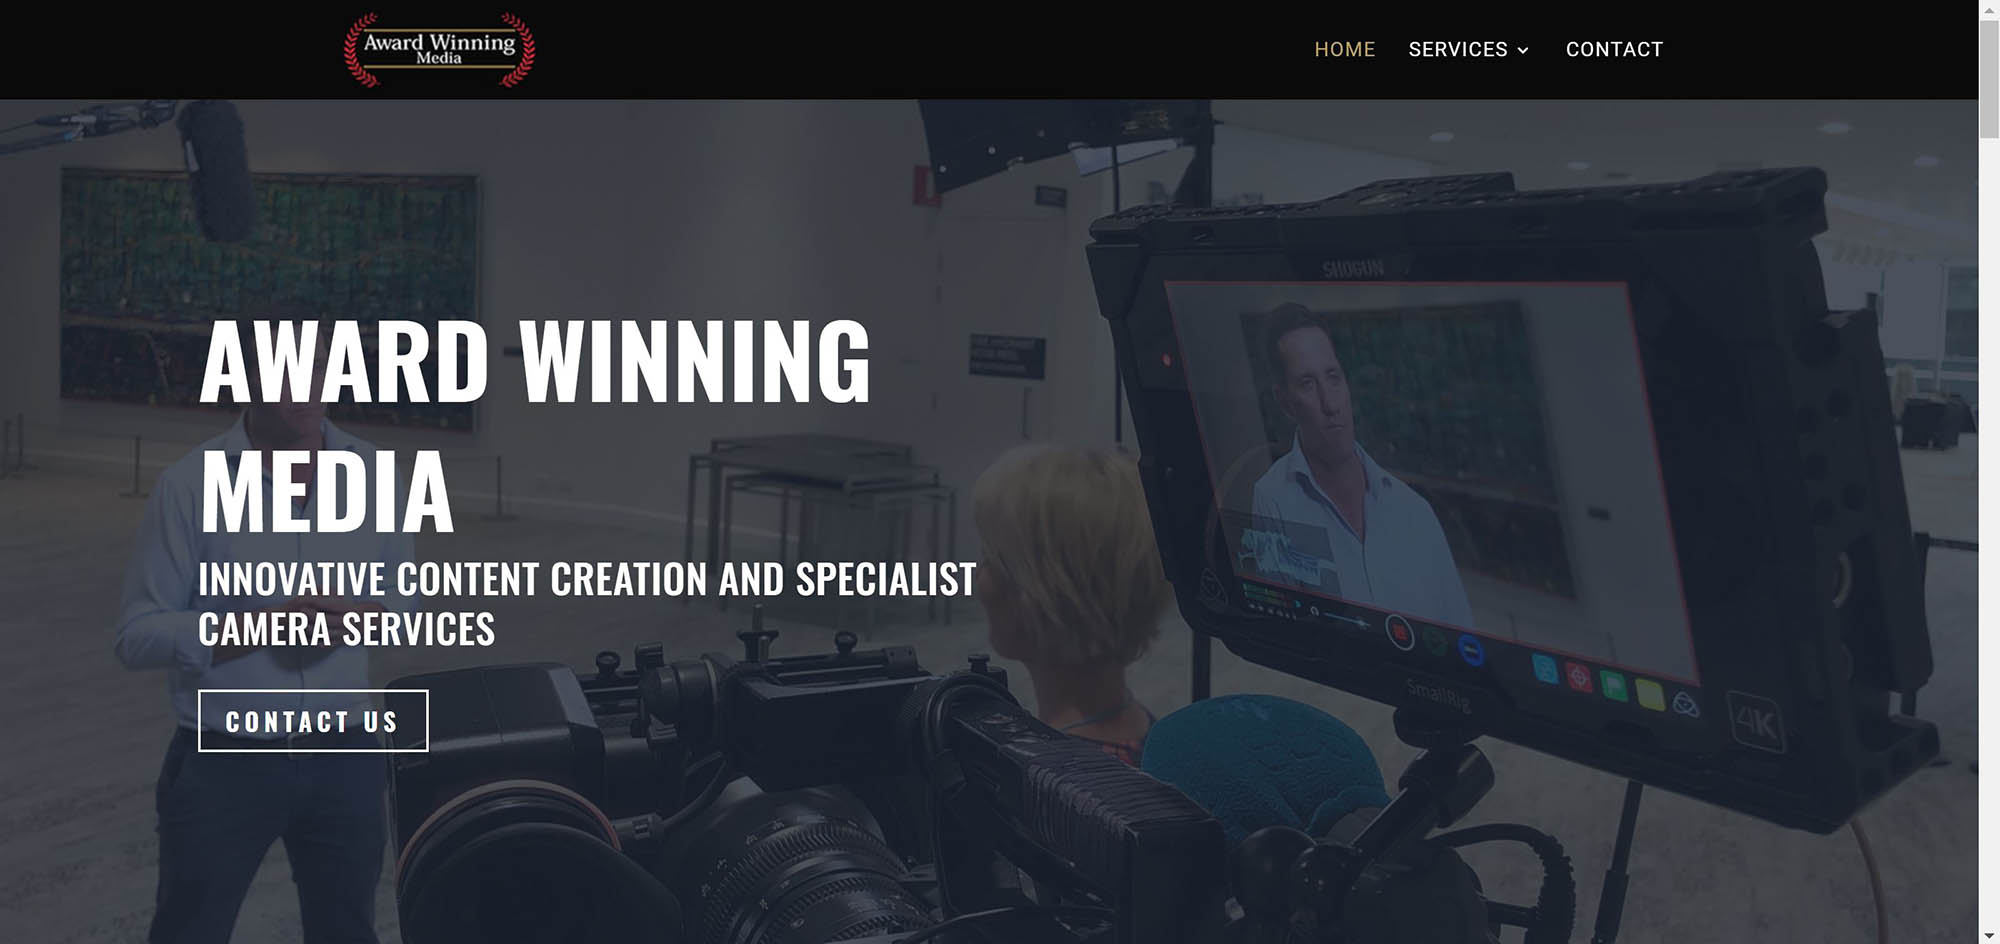 Award Winning Media Home Page by TC Web